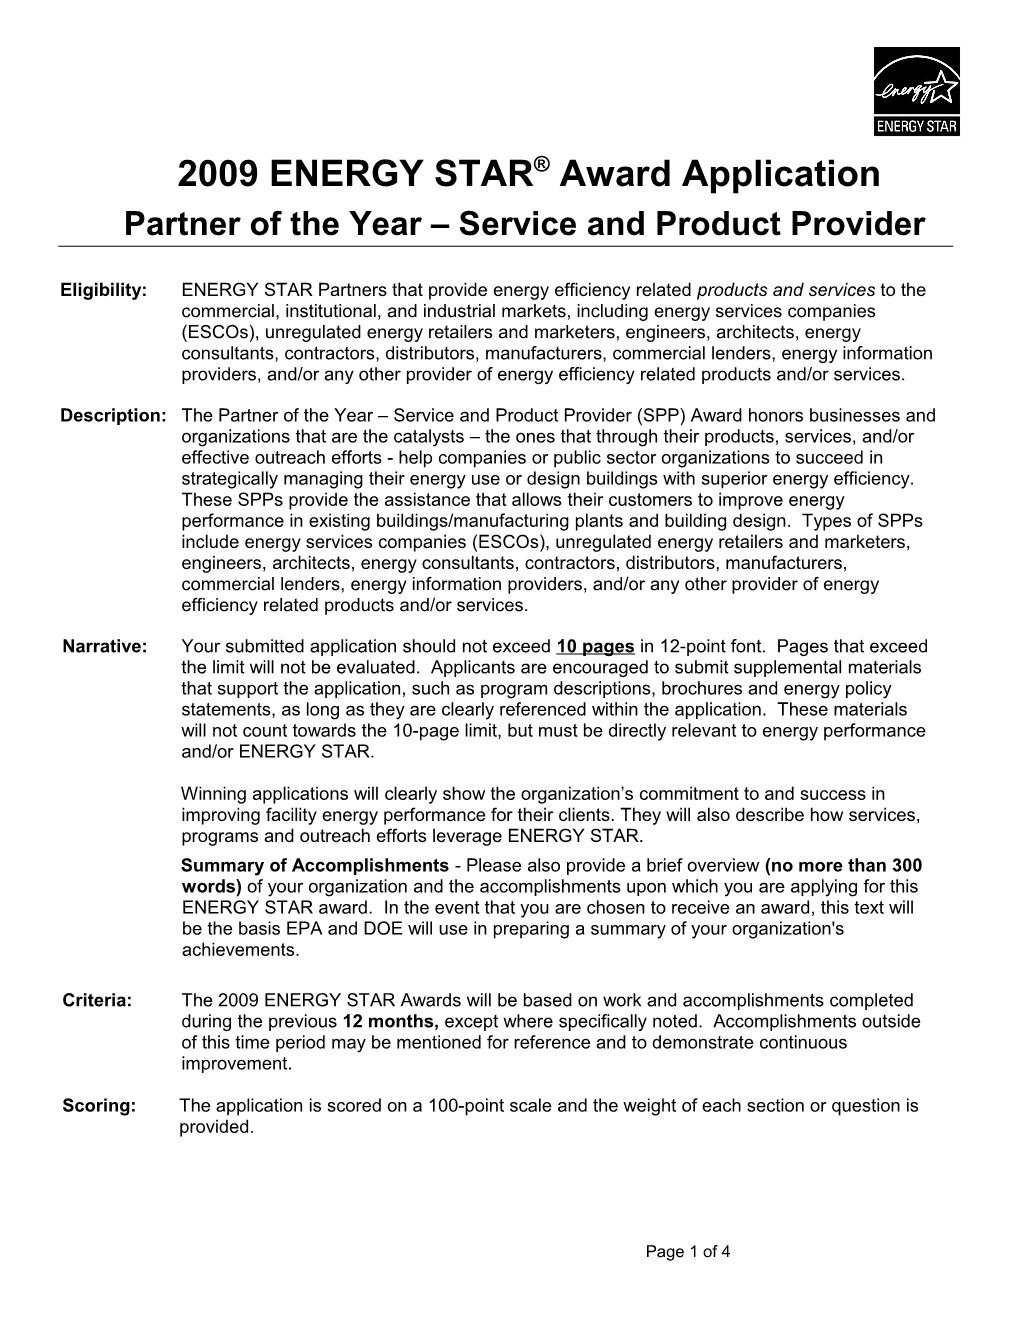 2004 ENERGY STAR Awards